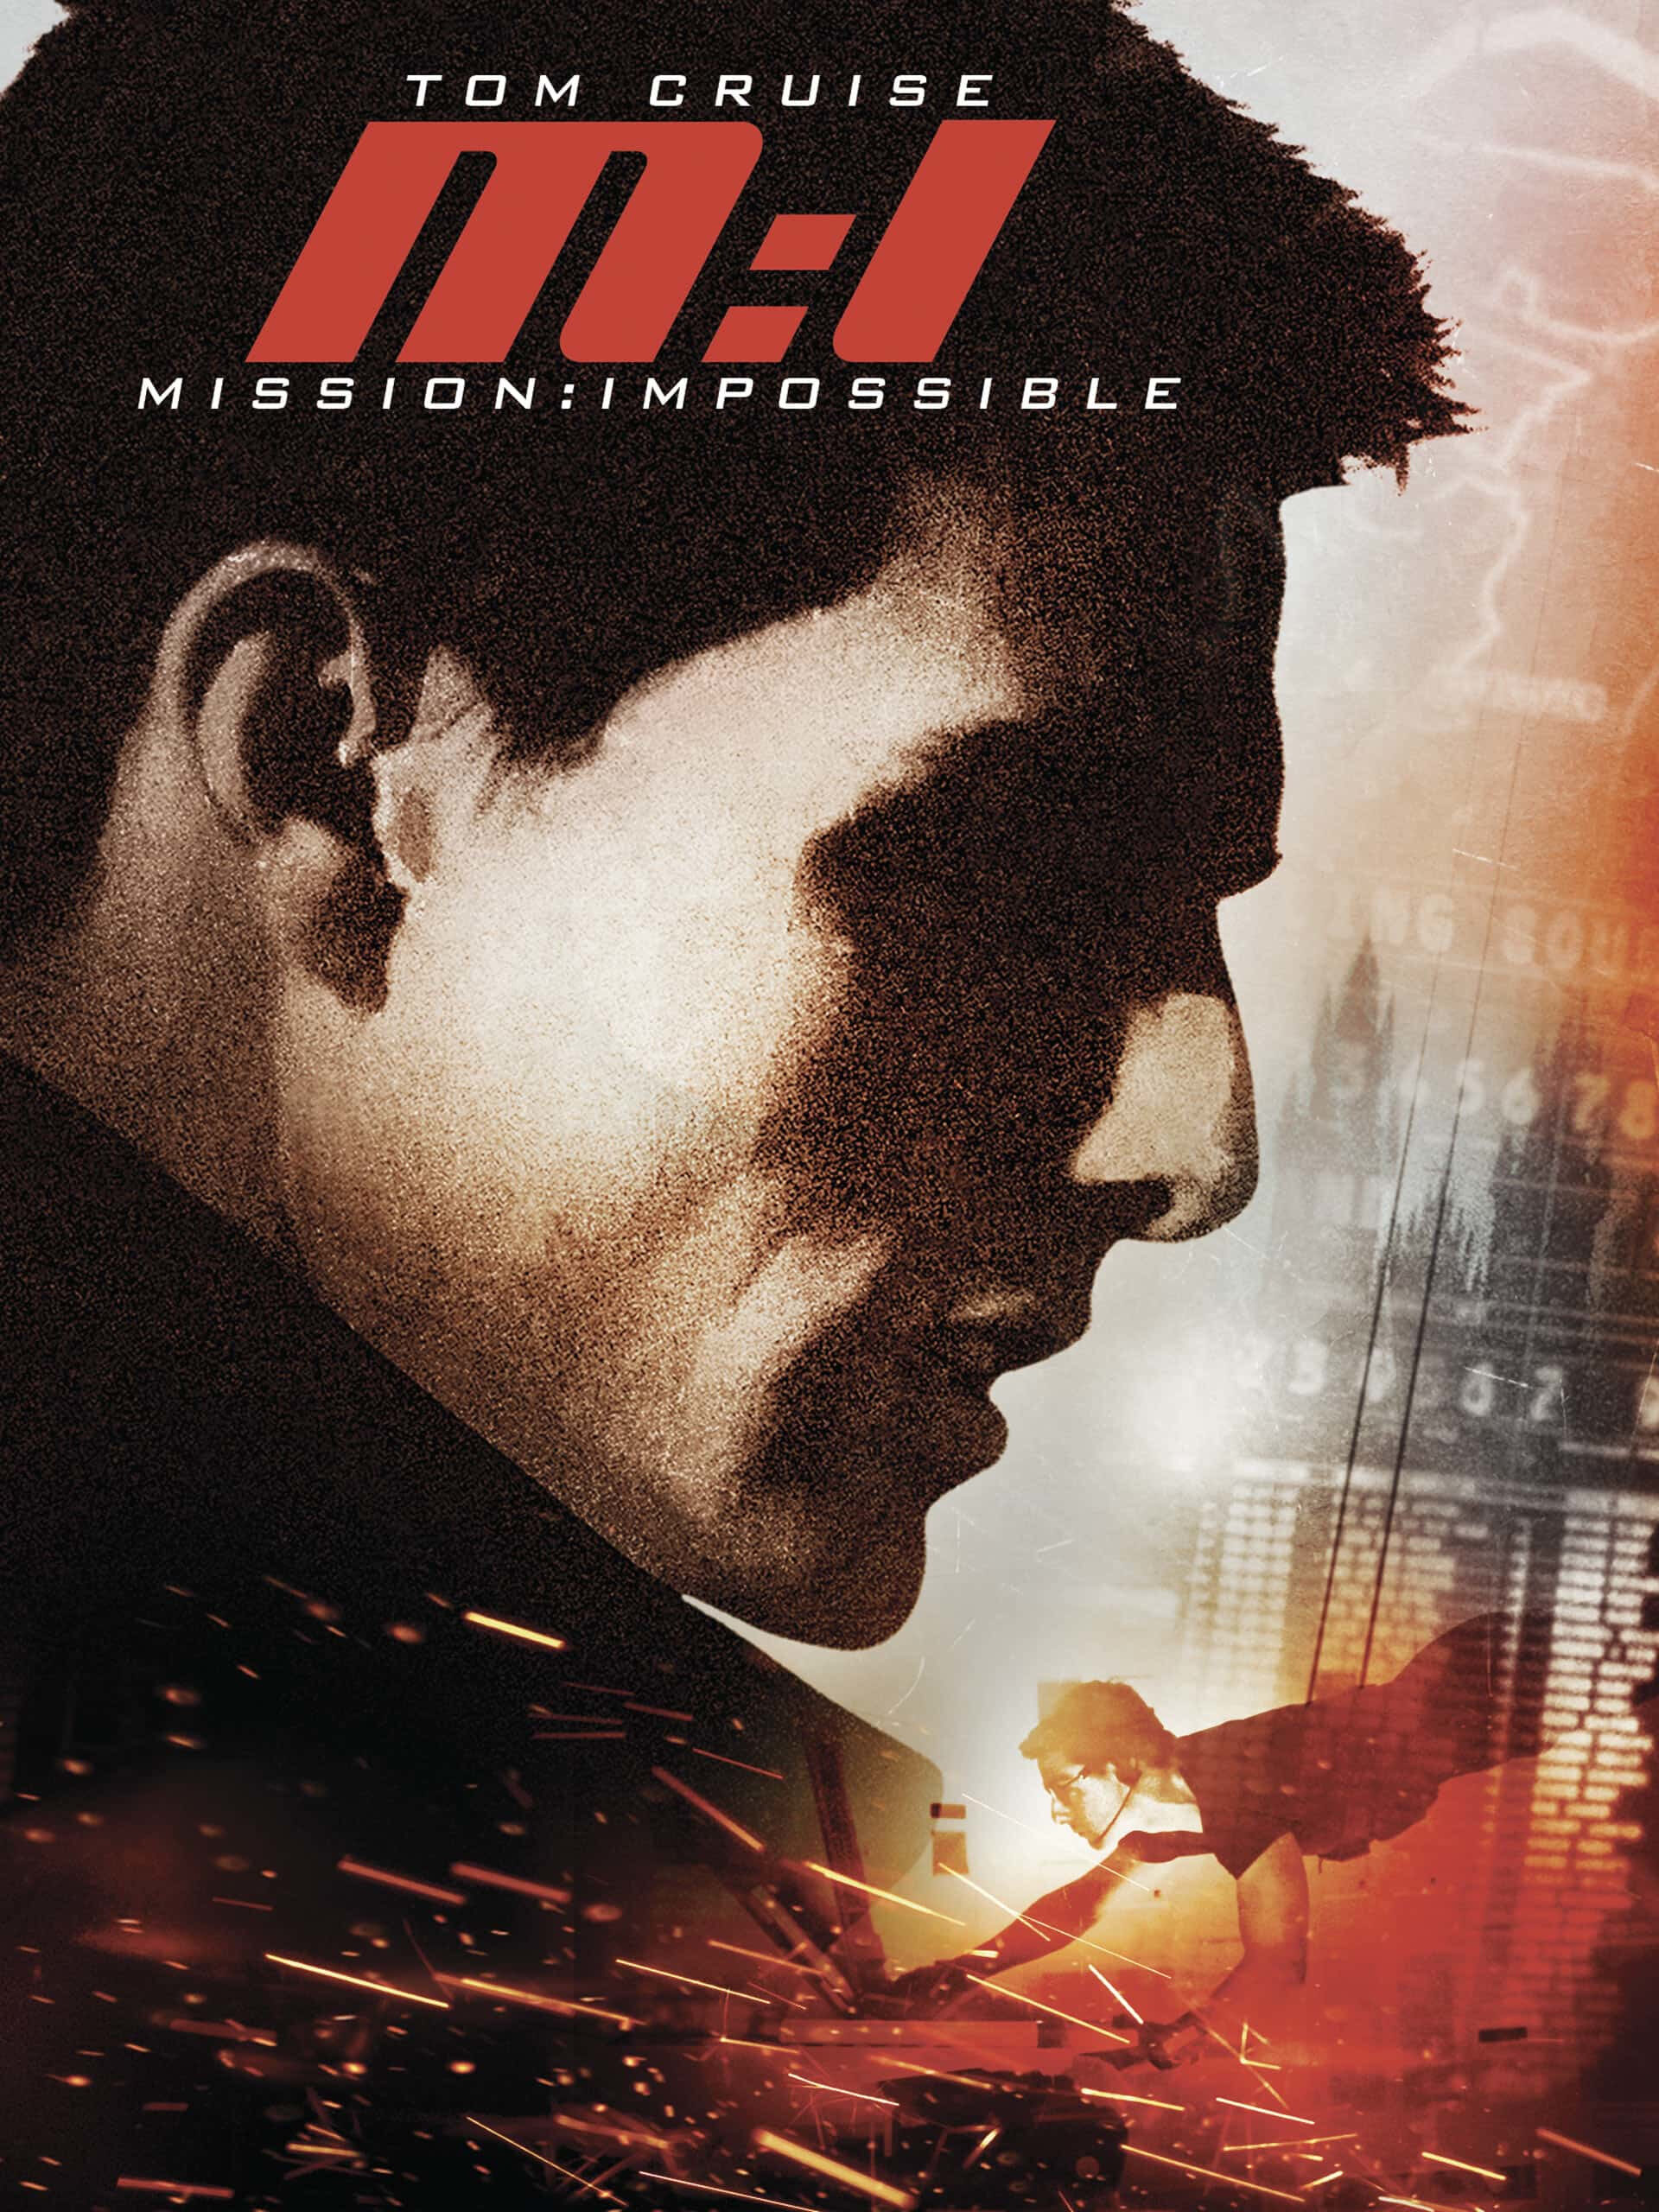 Mission Impossible มิชชั่นอิมพอสซิเบิ้ล ภาค 1-6 DVD หนัง มาสเตอร์ พากย์ไทย  | Lazada.co.th